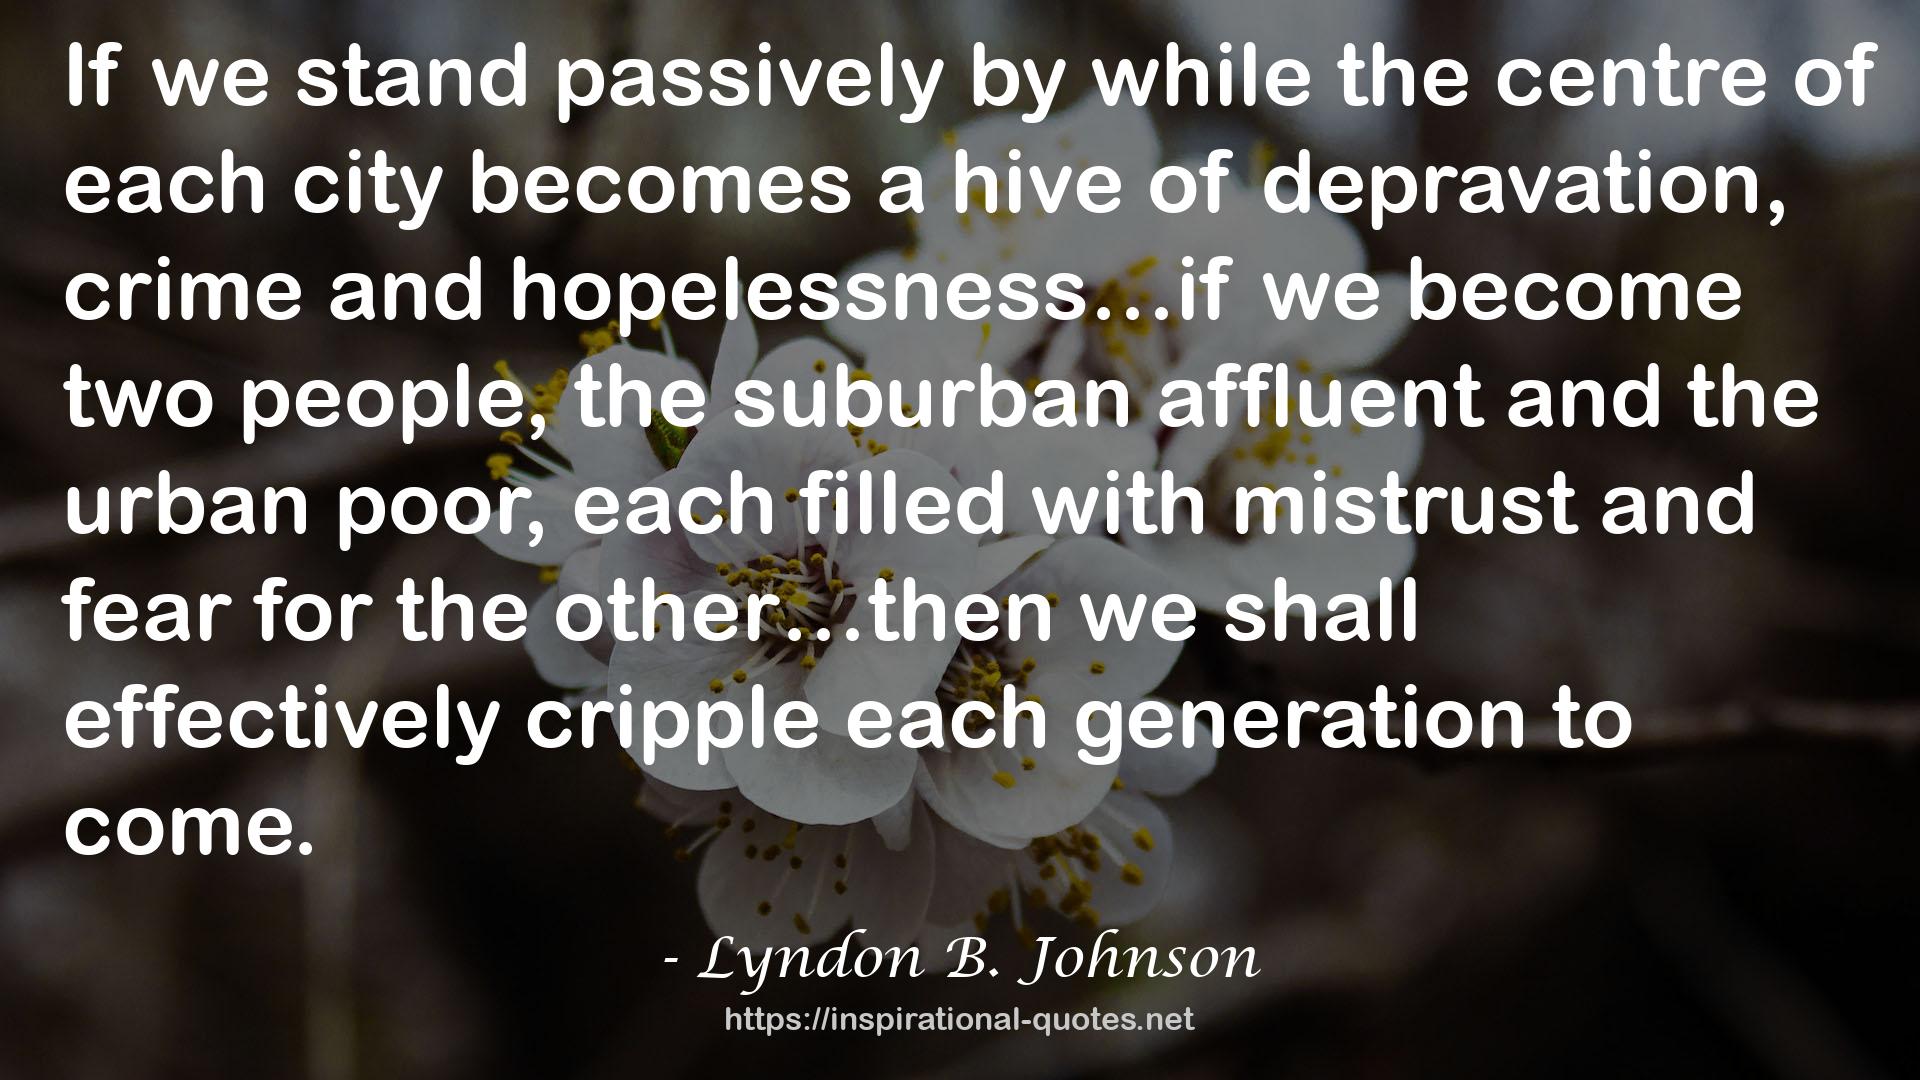 Lyndon B. Johnson QUOTES